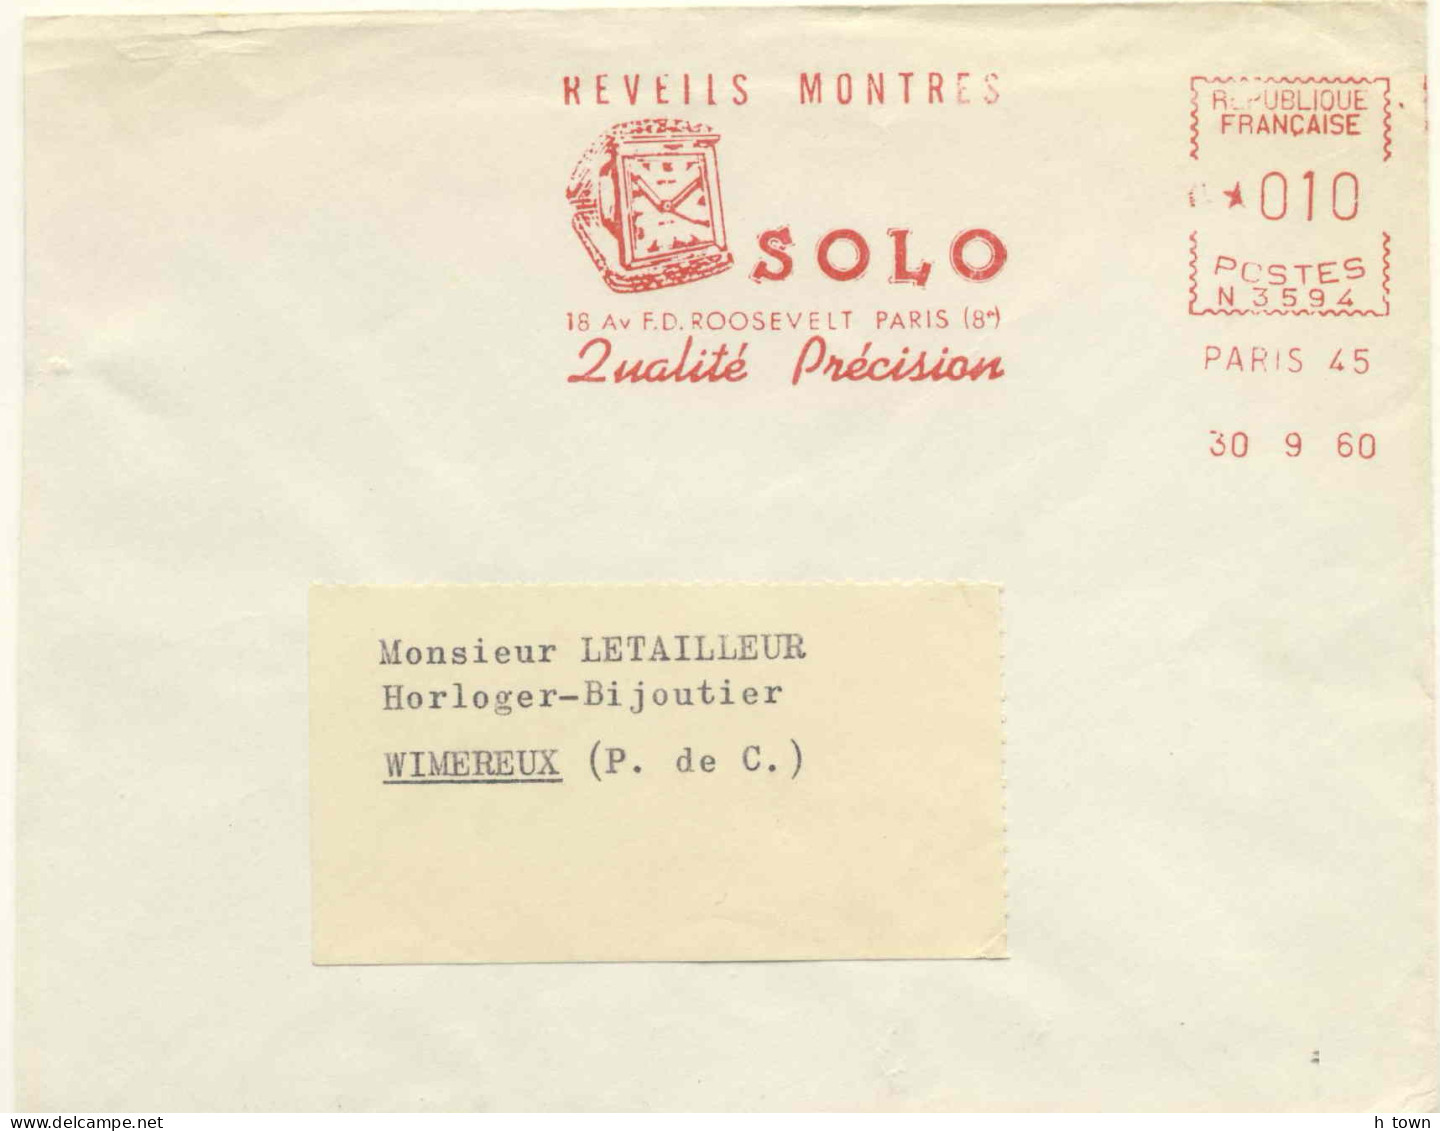 954  Montres Solo, Paris: Ema 1960 - Clock Meter Stamp From Paris, France. Watch Horloge - Horlogerie